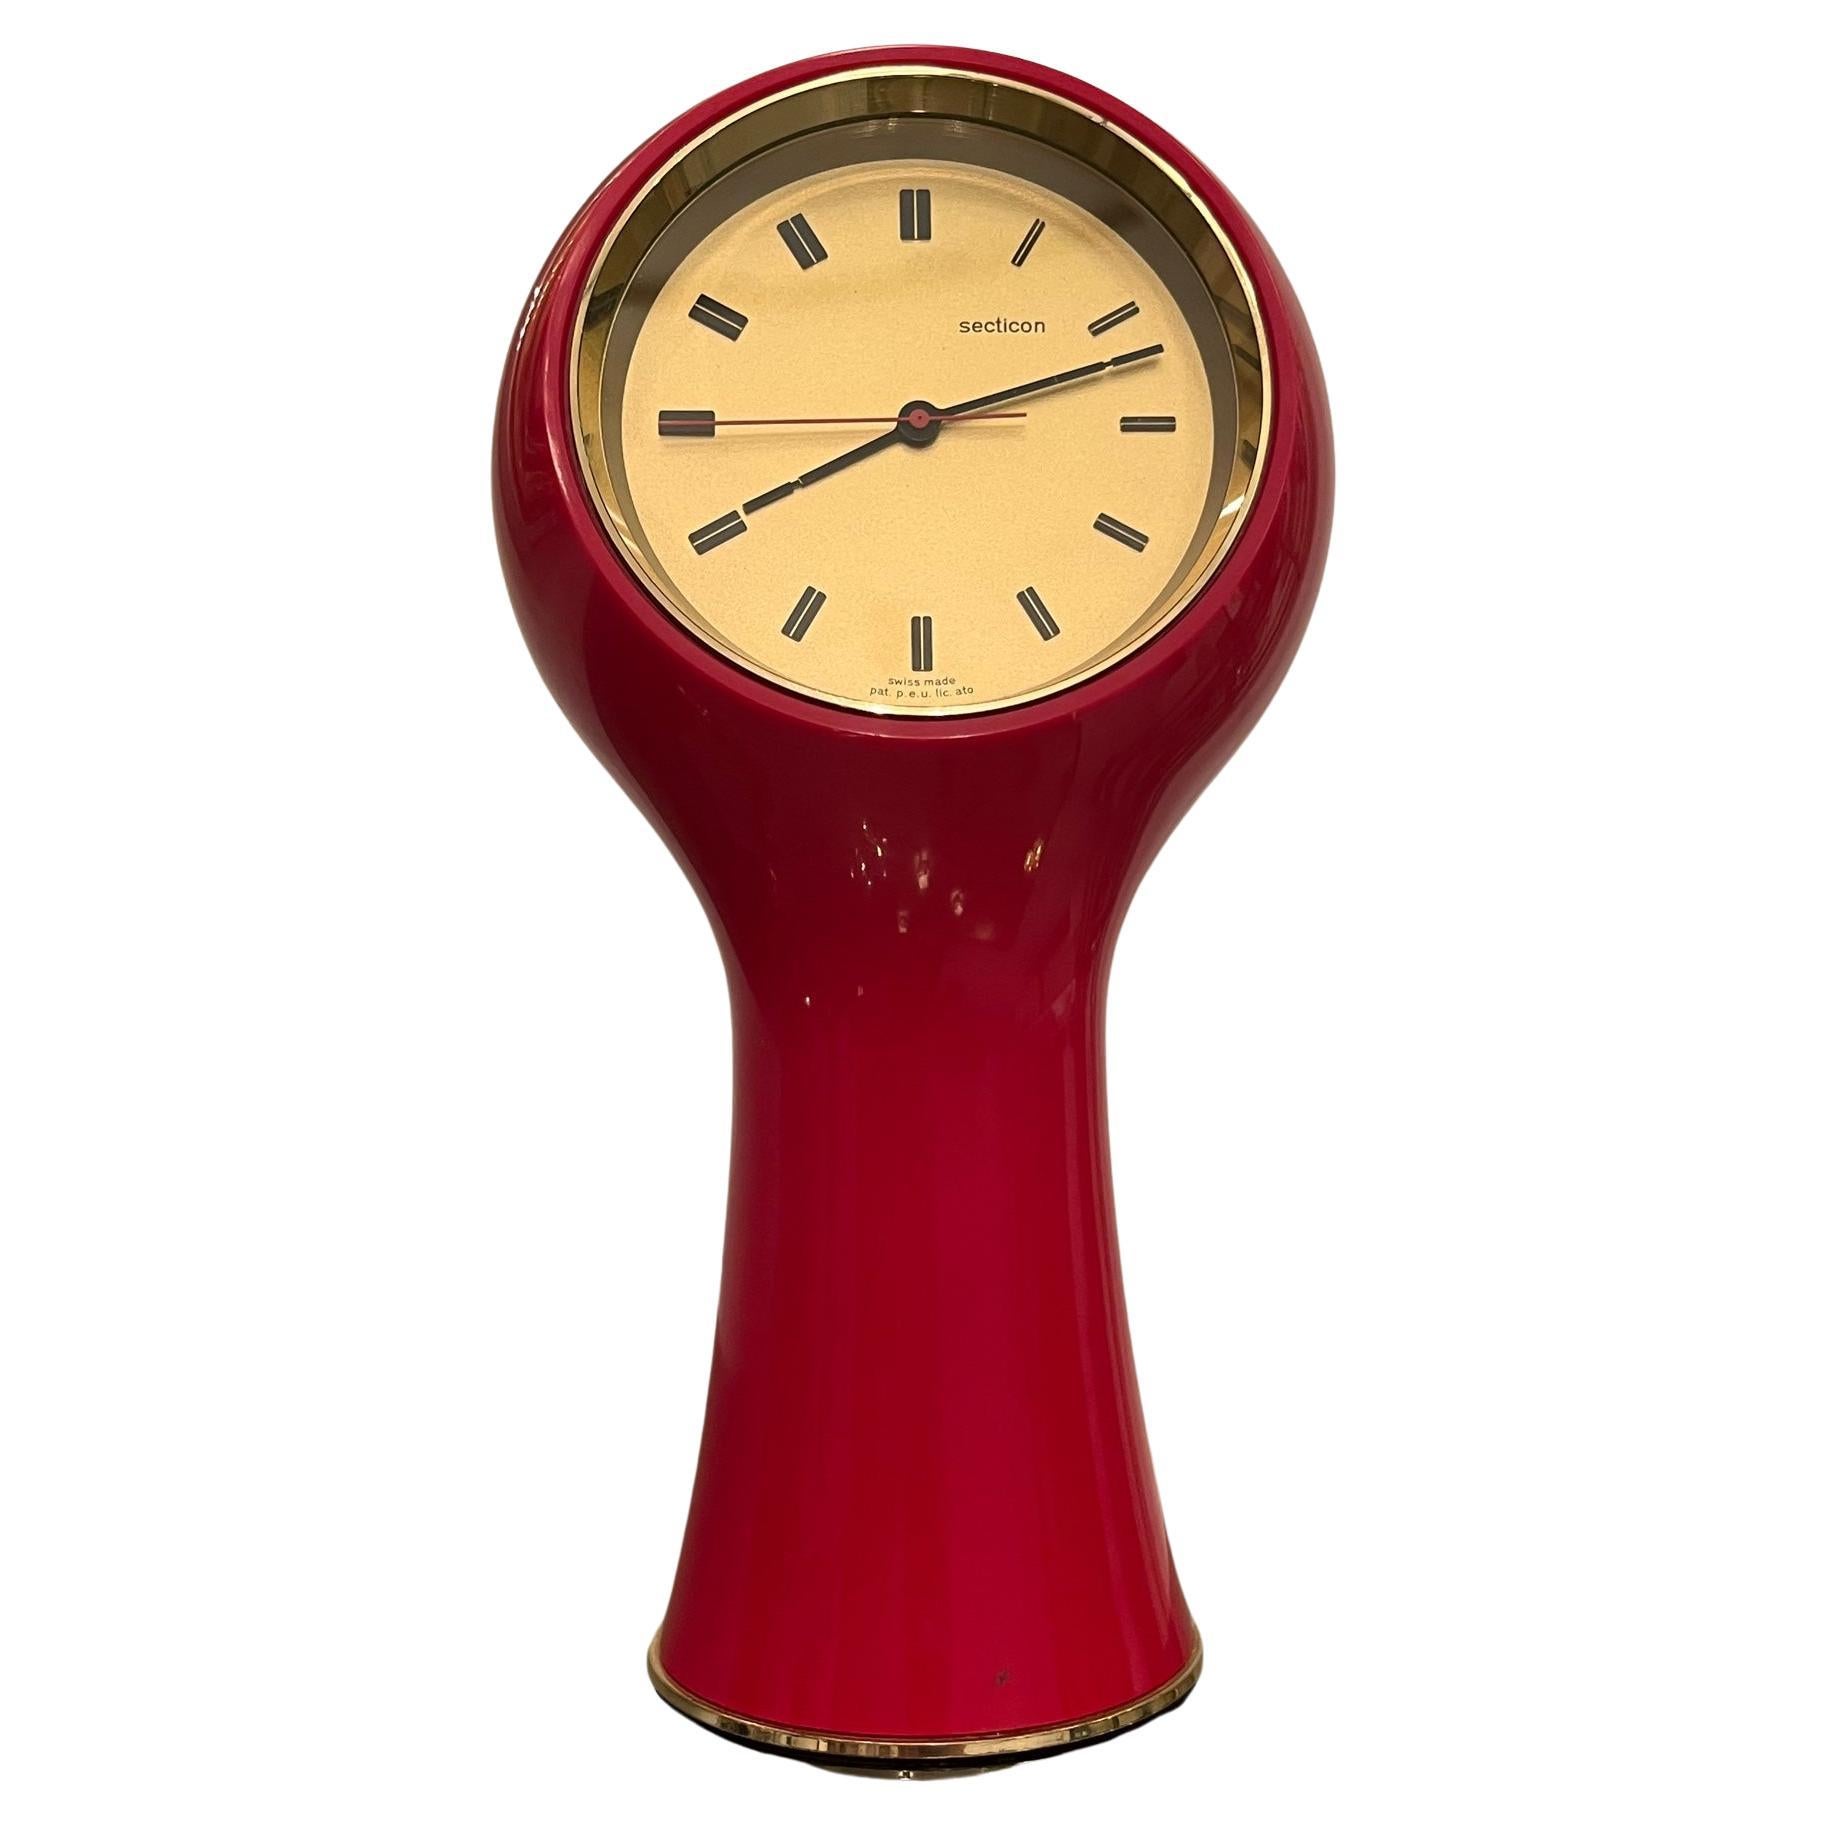 Horloge de table Secticon Mod. T1 d'Angelo Mangiarotti, fabrication suisse, 1956